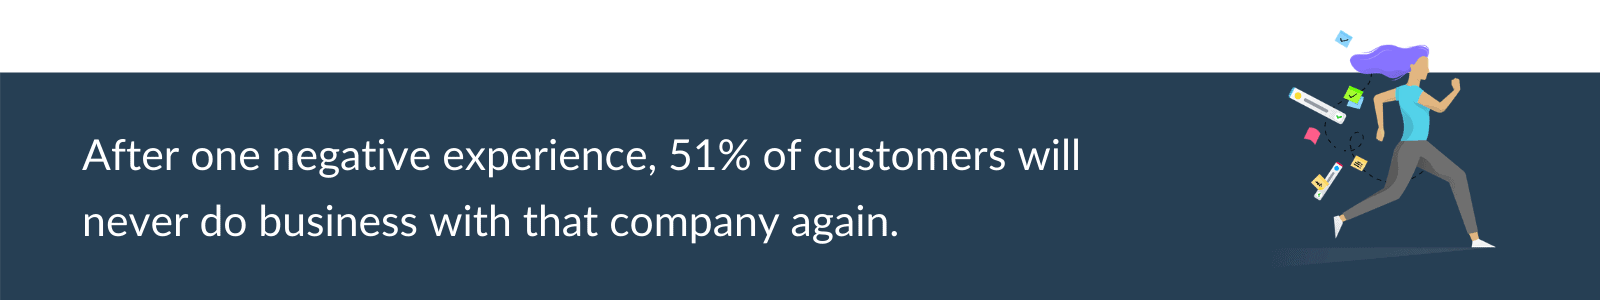 Construction customer service statistic #2